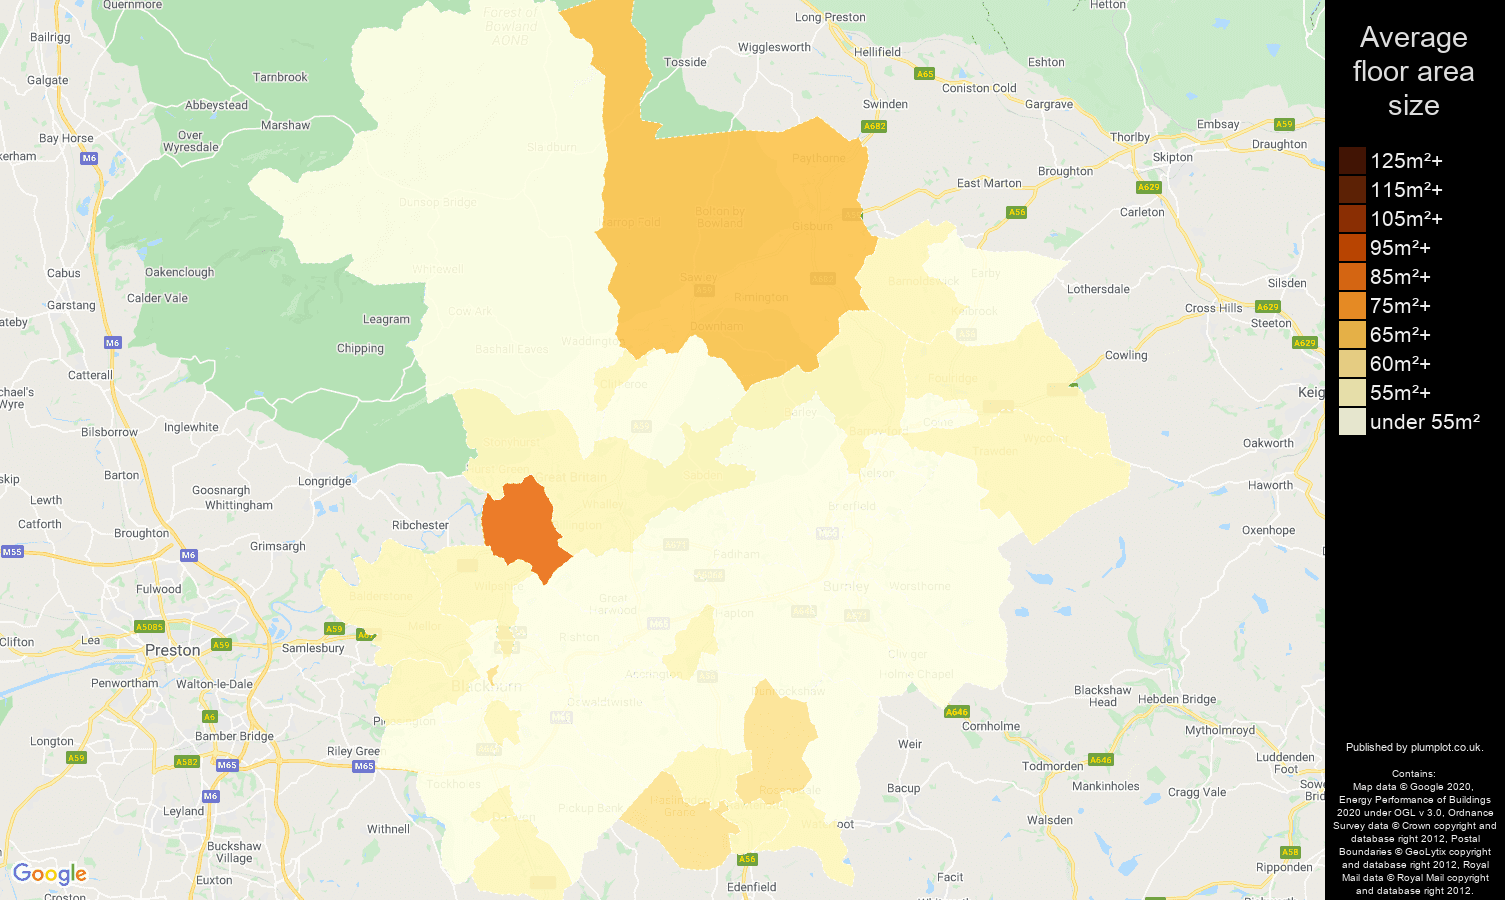 Blackburn map of average floor area size of flats